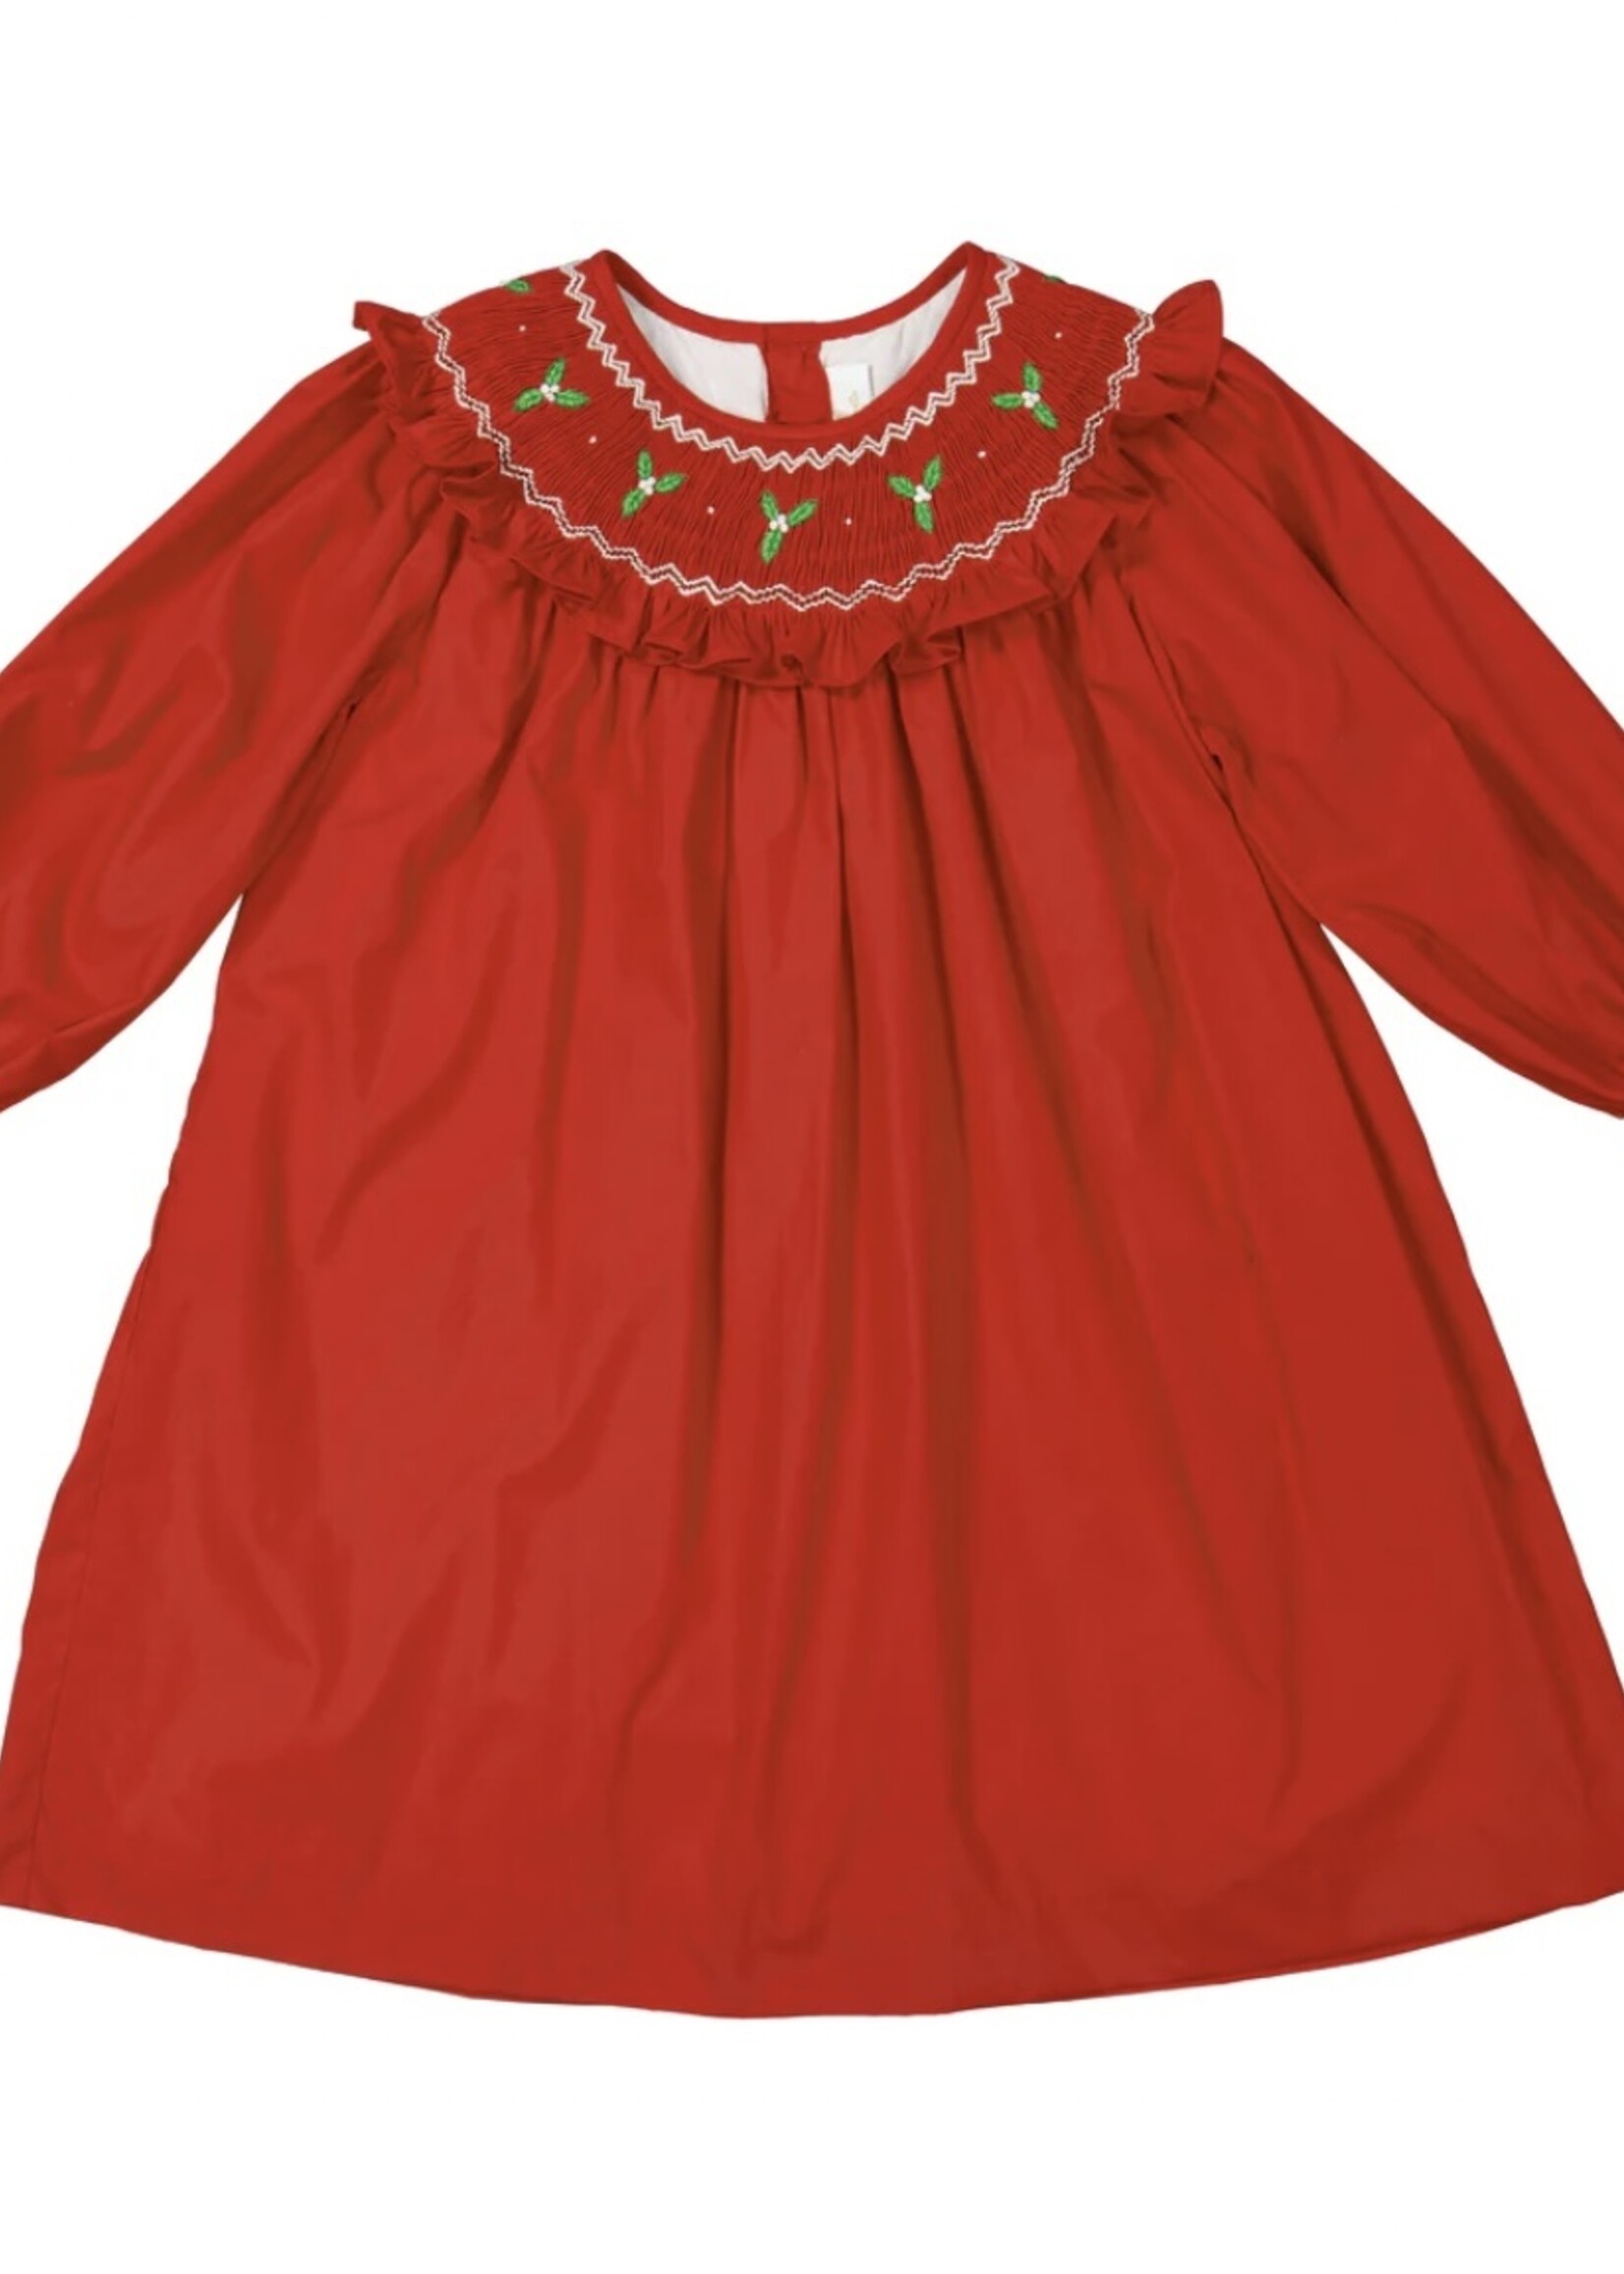 MARY JANE RED BISHOP DRESS